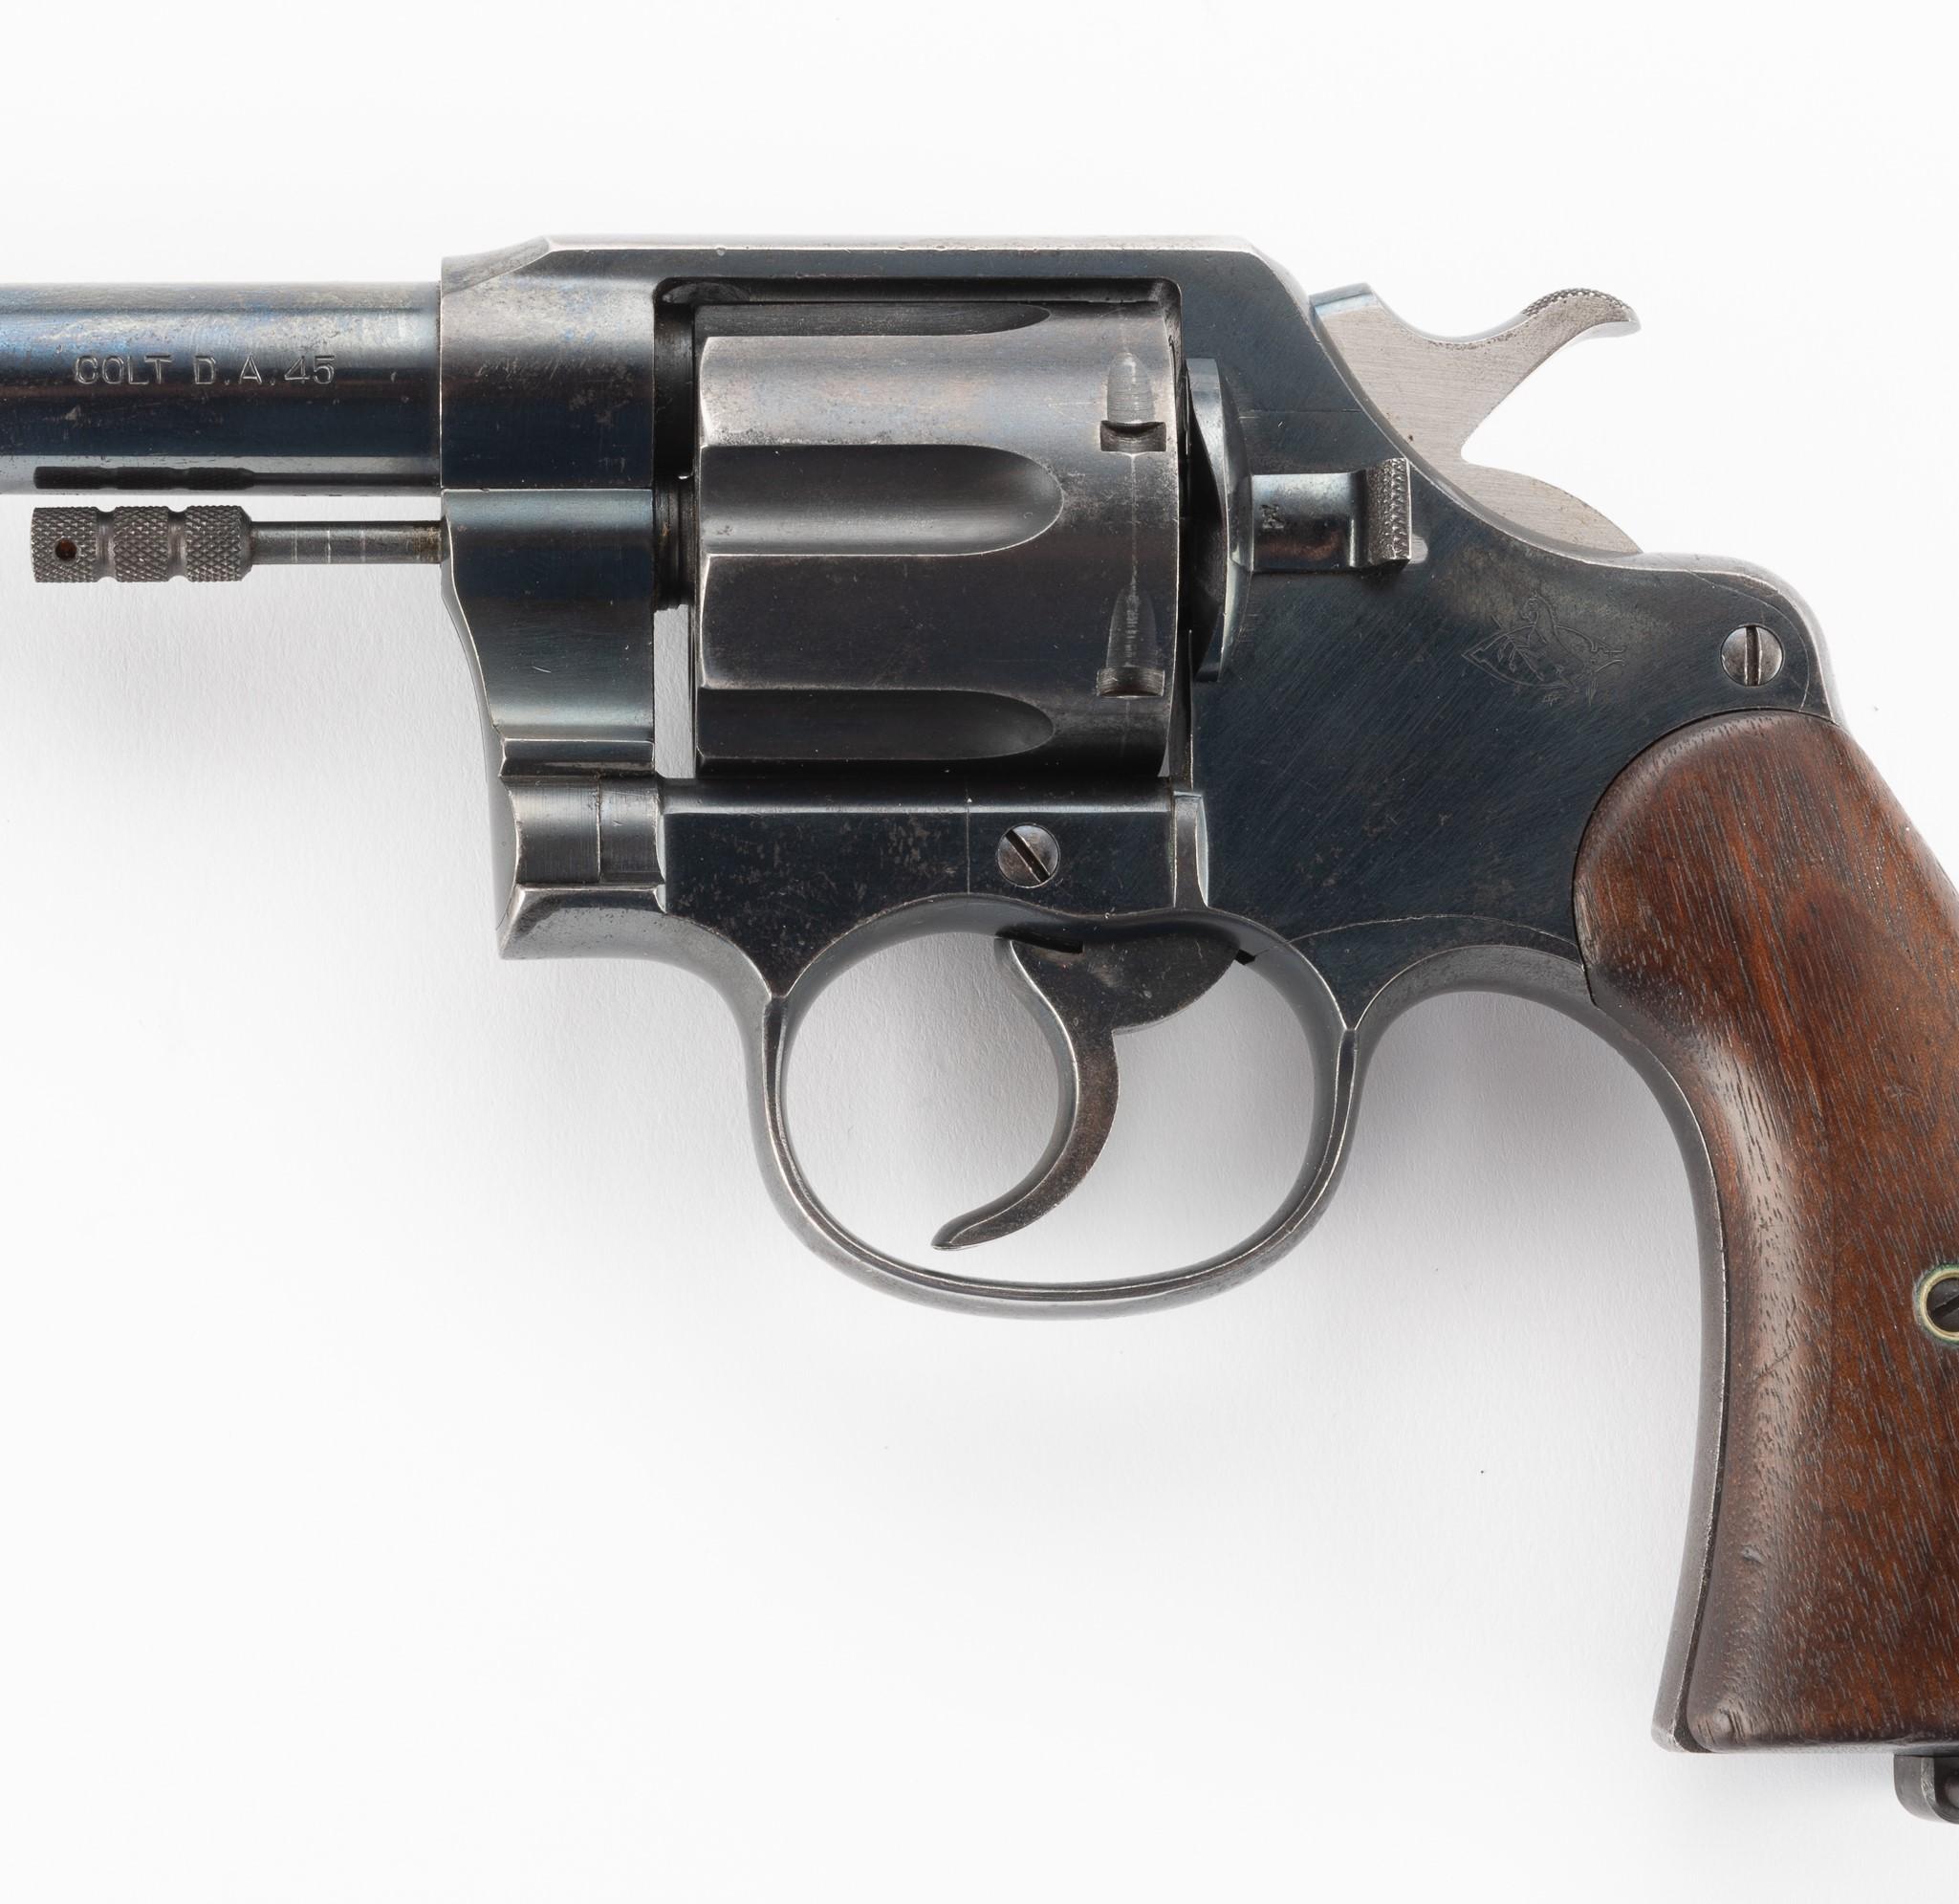 U.S. Army M1909. 45 Long Colt Revolver